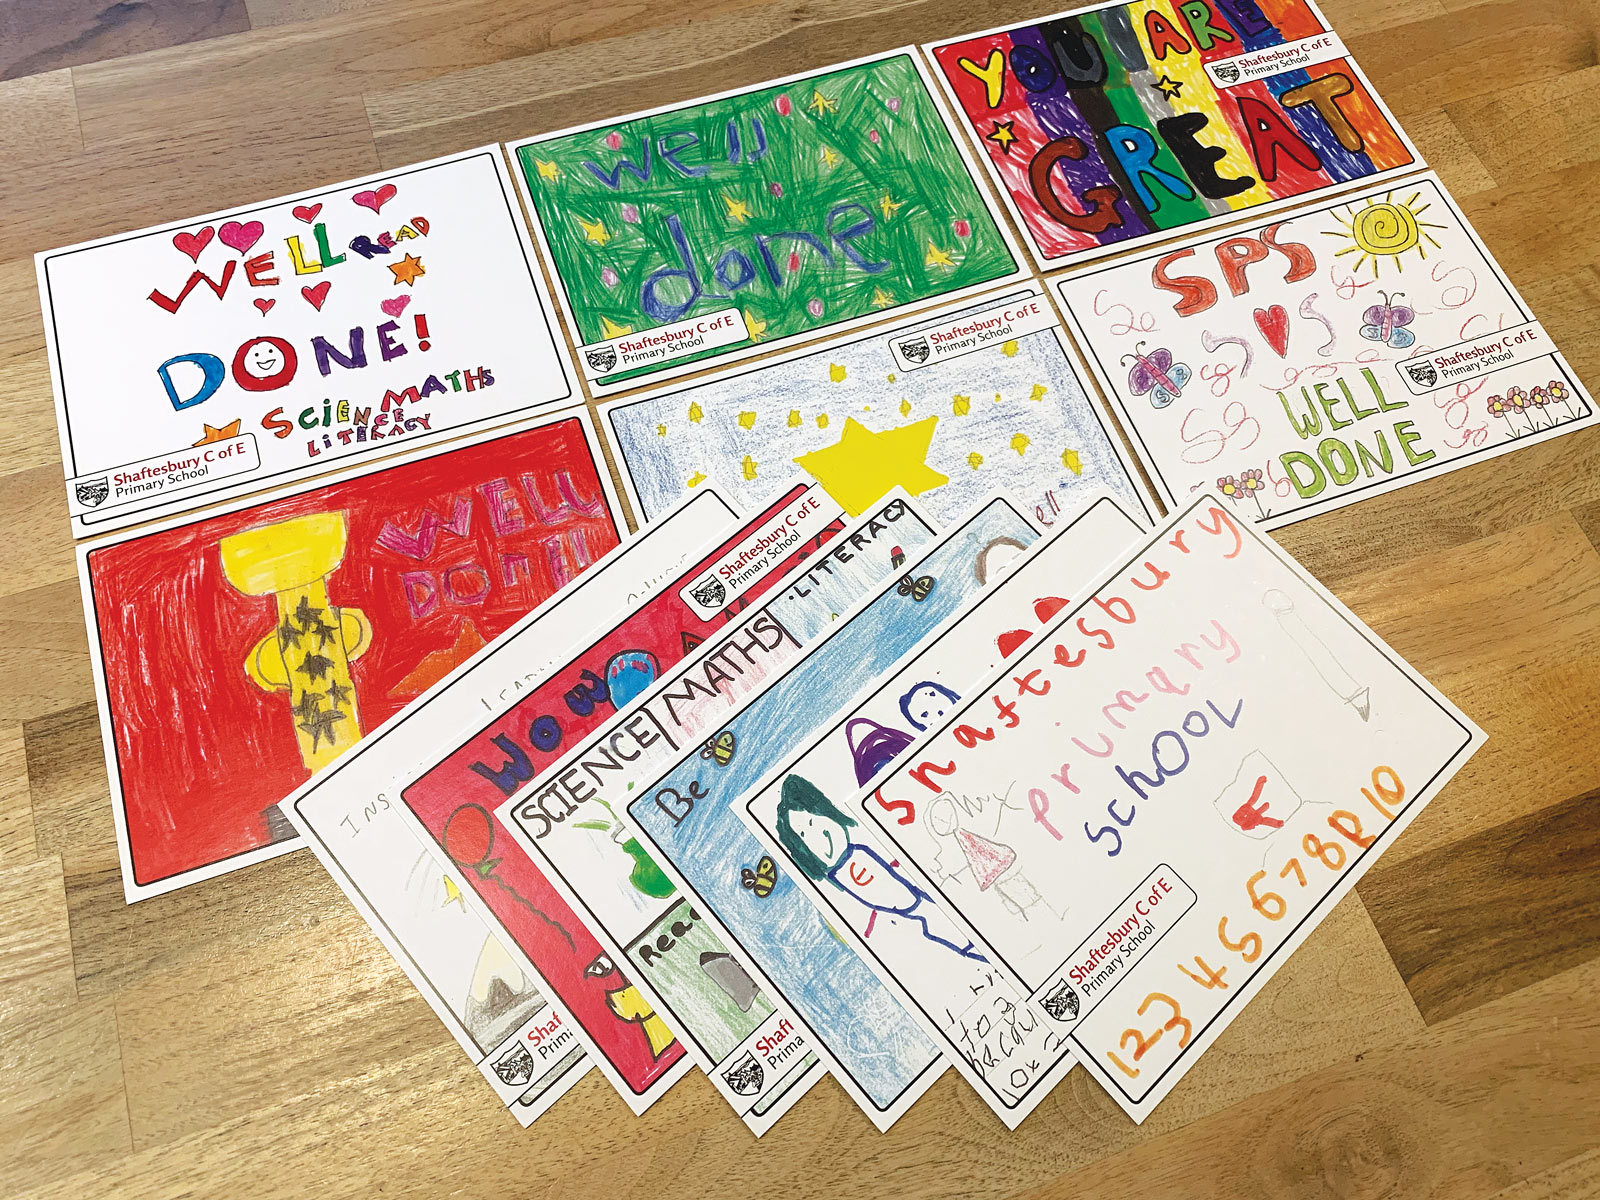 Shaftesbury School children drawn postcards